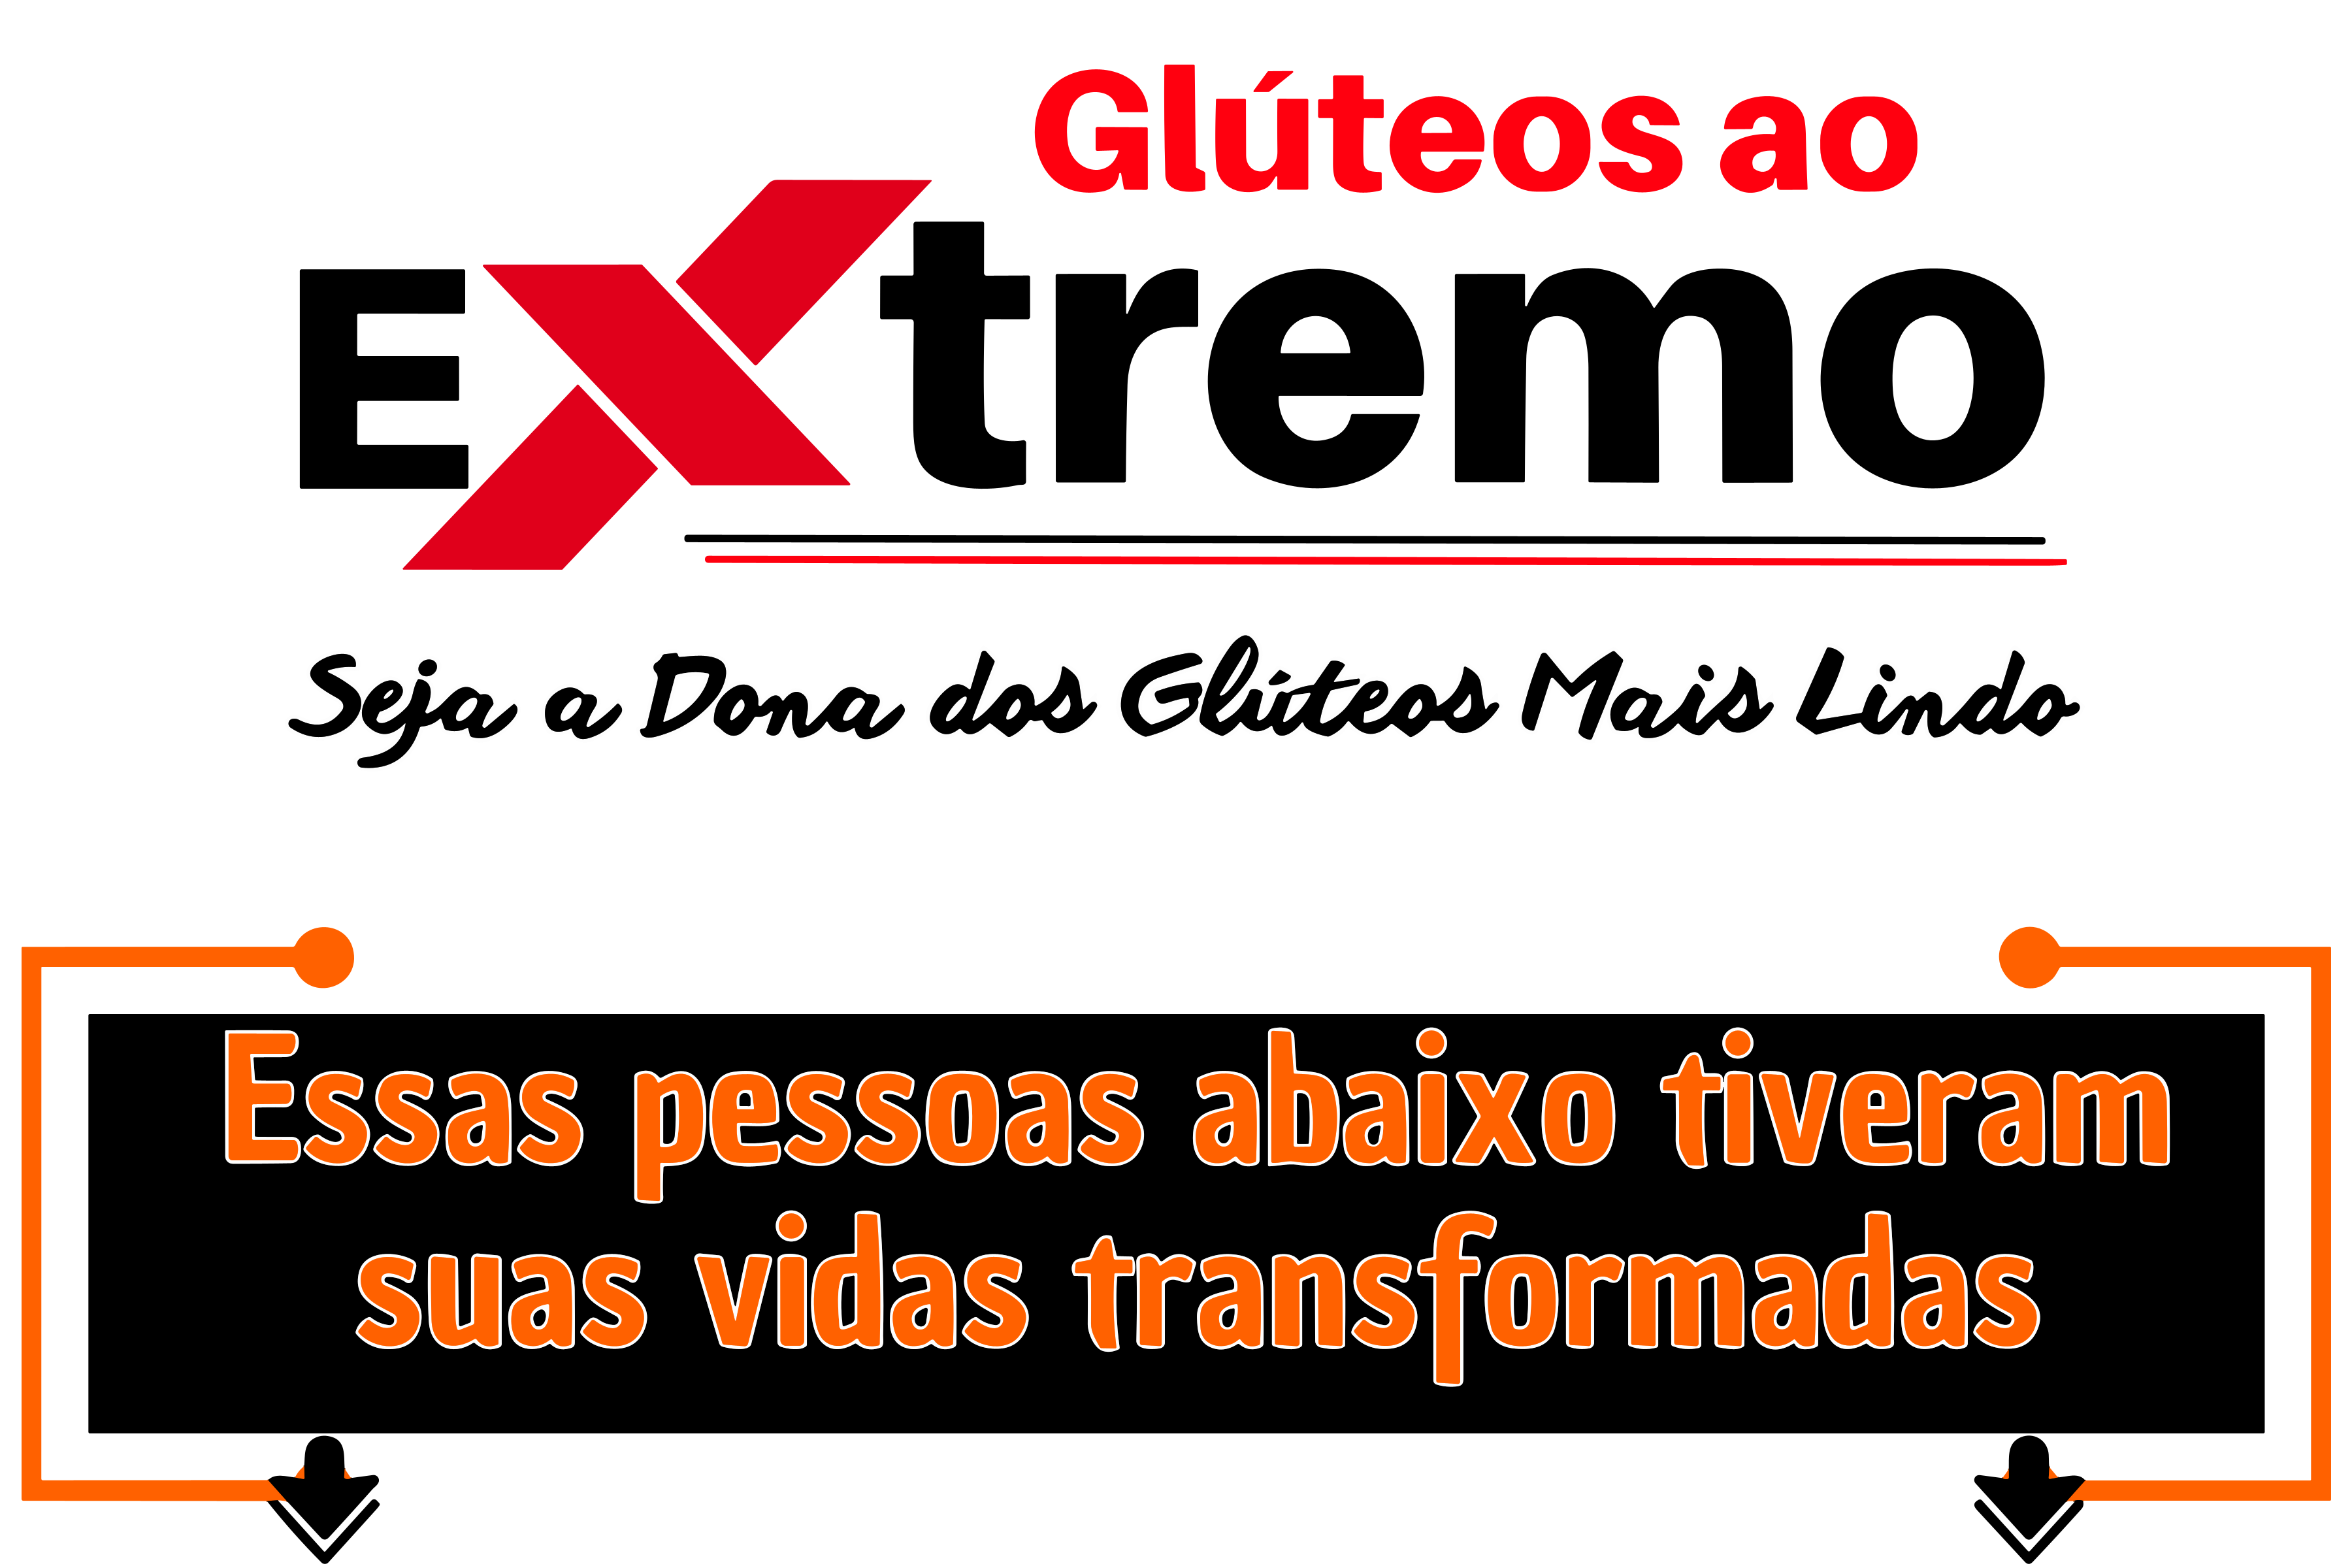 glúteos ao extremo - gluteos (1)